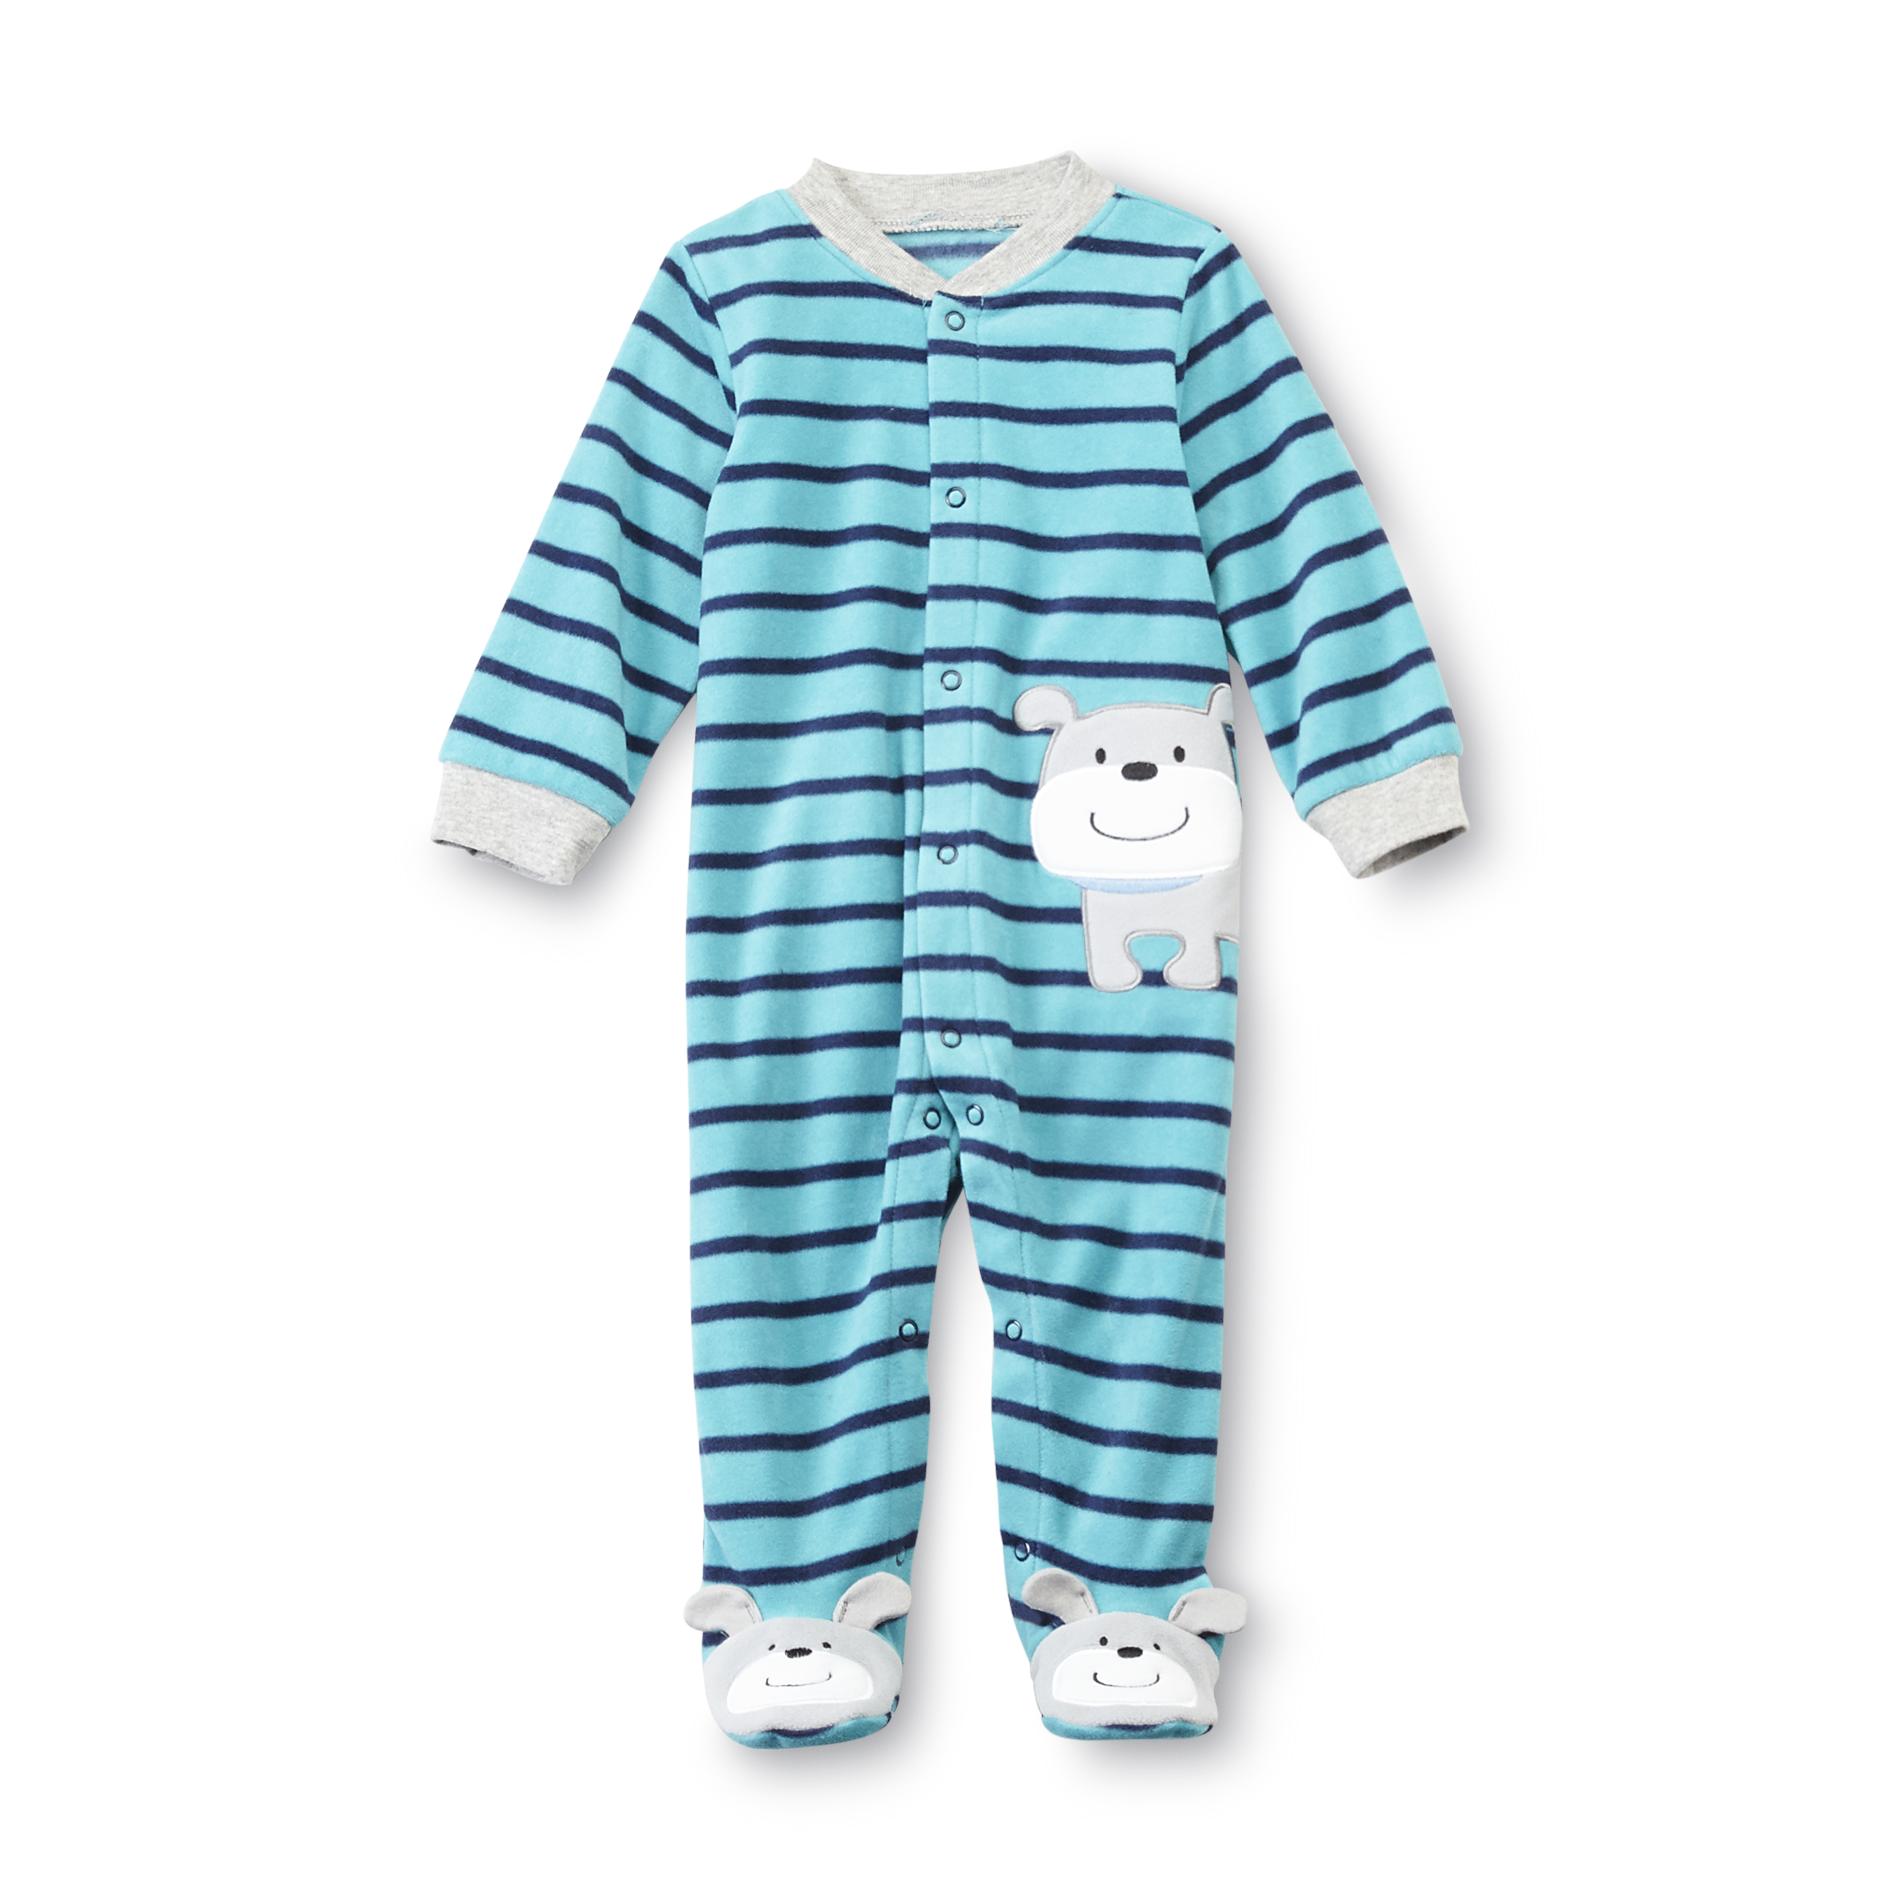 Little Wonders Newborn Boy's Striped Footed Pajamas - Dog